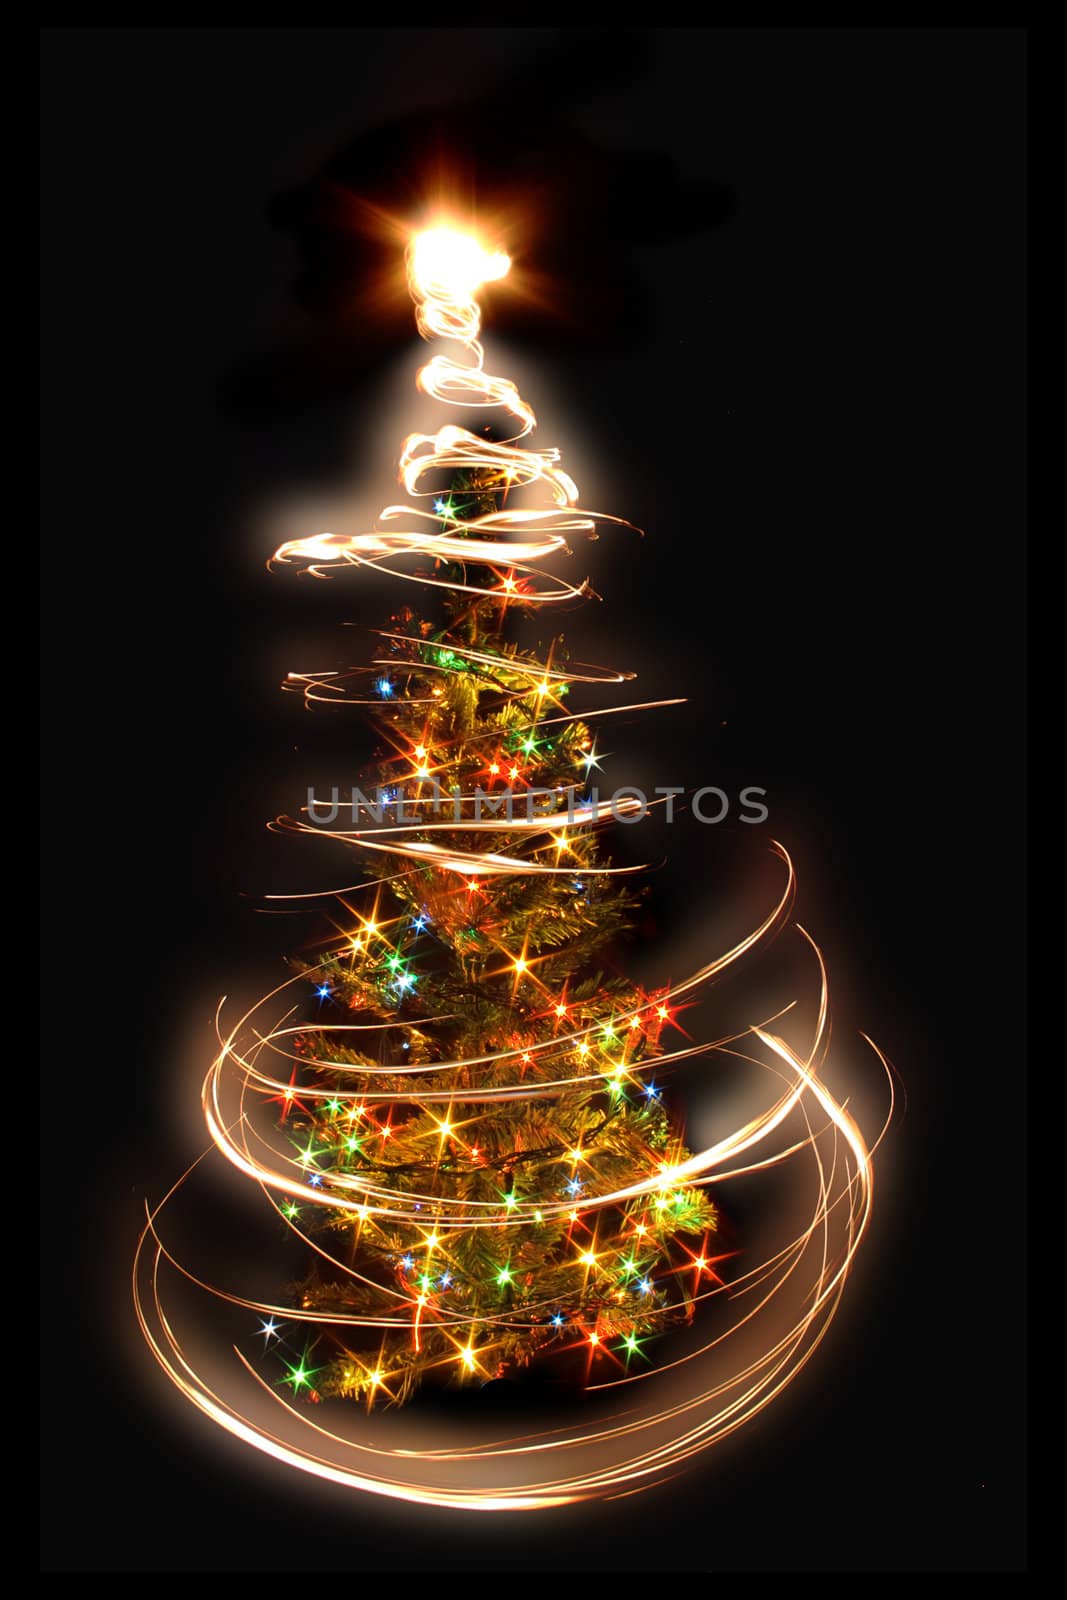 christmas tree frrom the bulb light on the black background